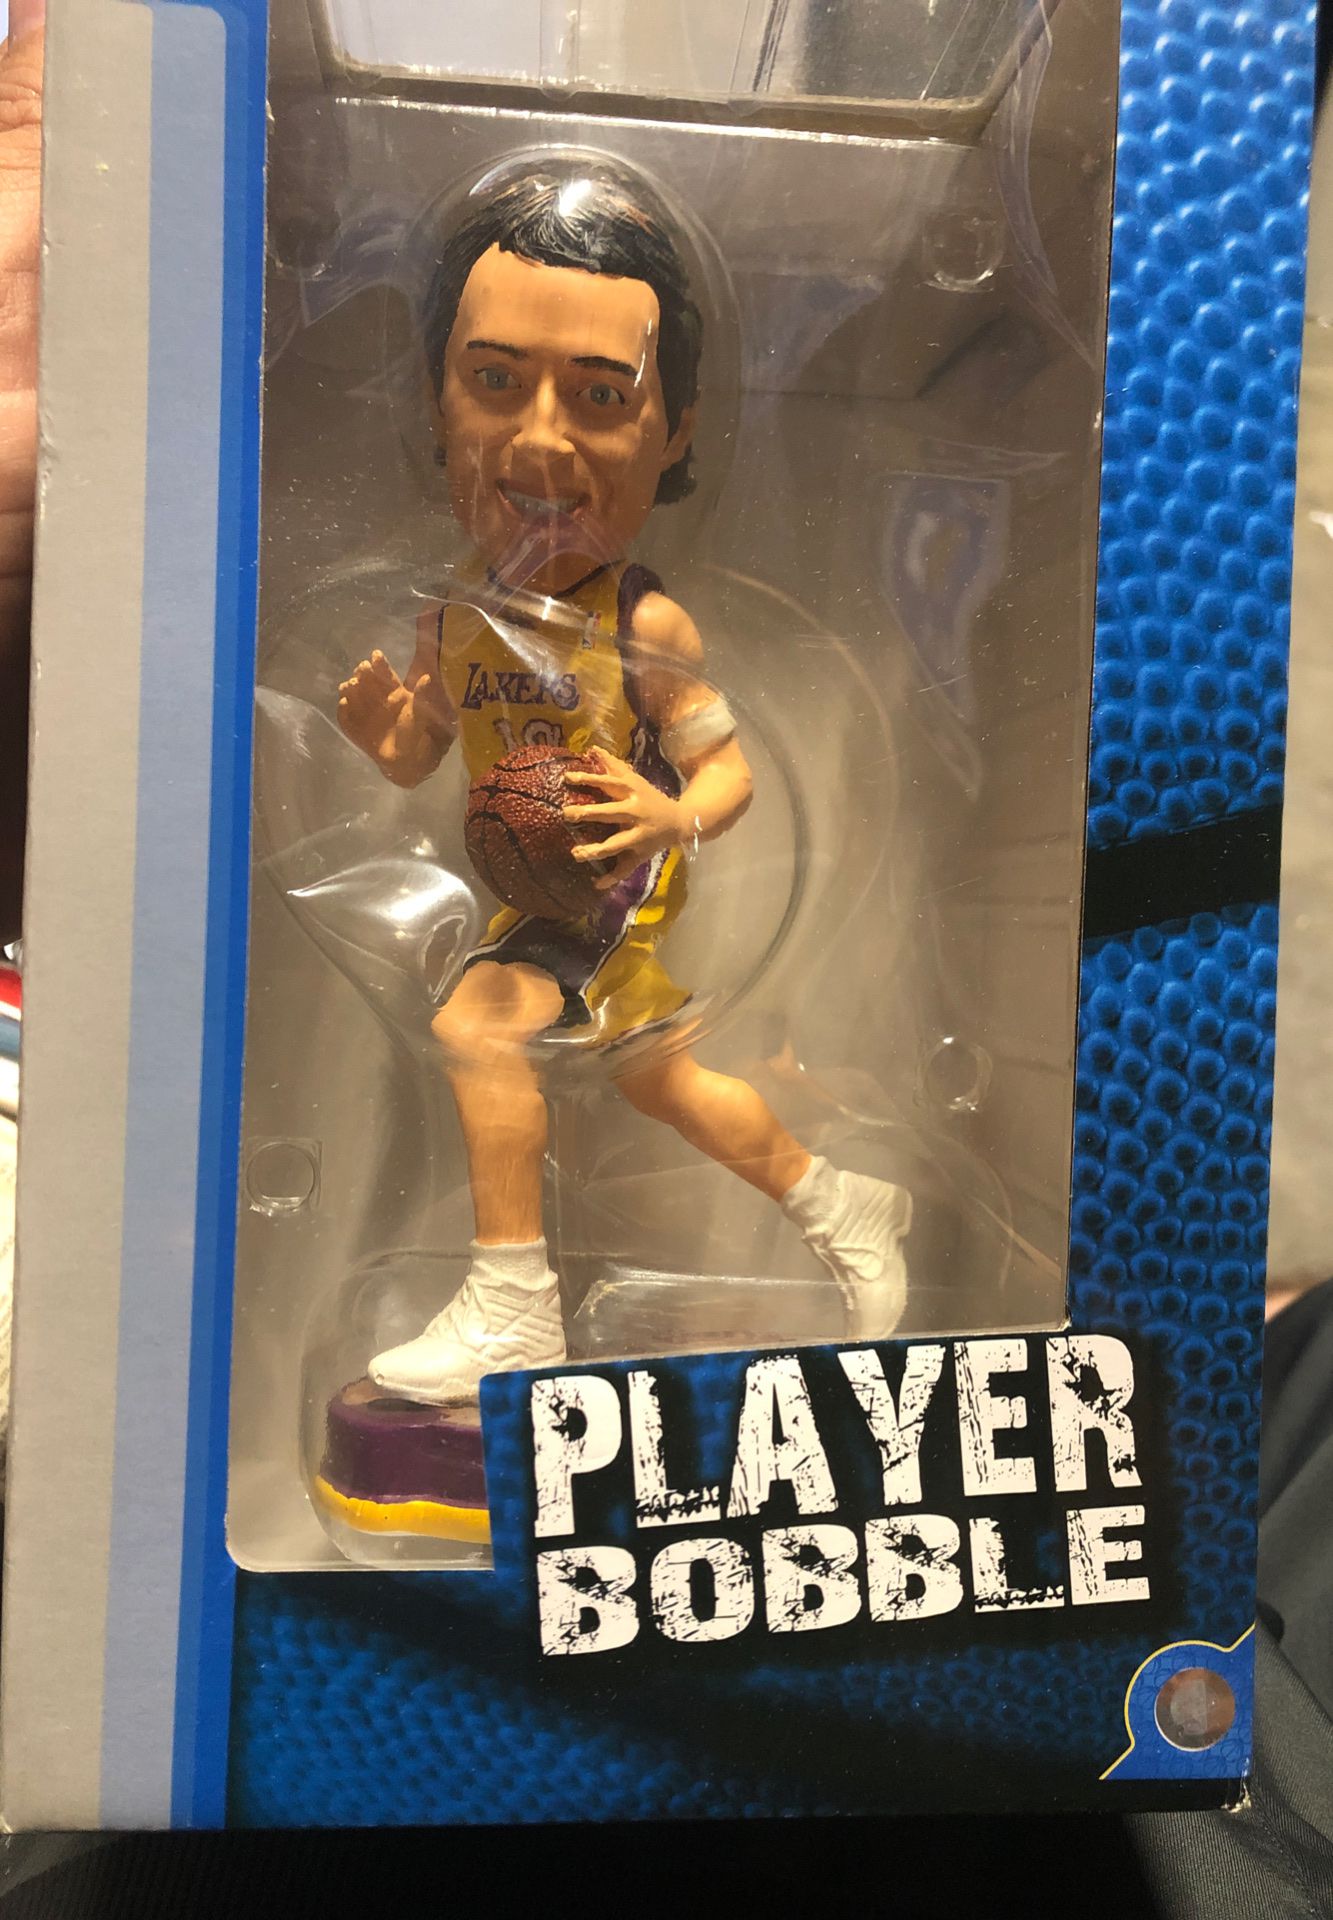 Lakers bobblehead